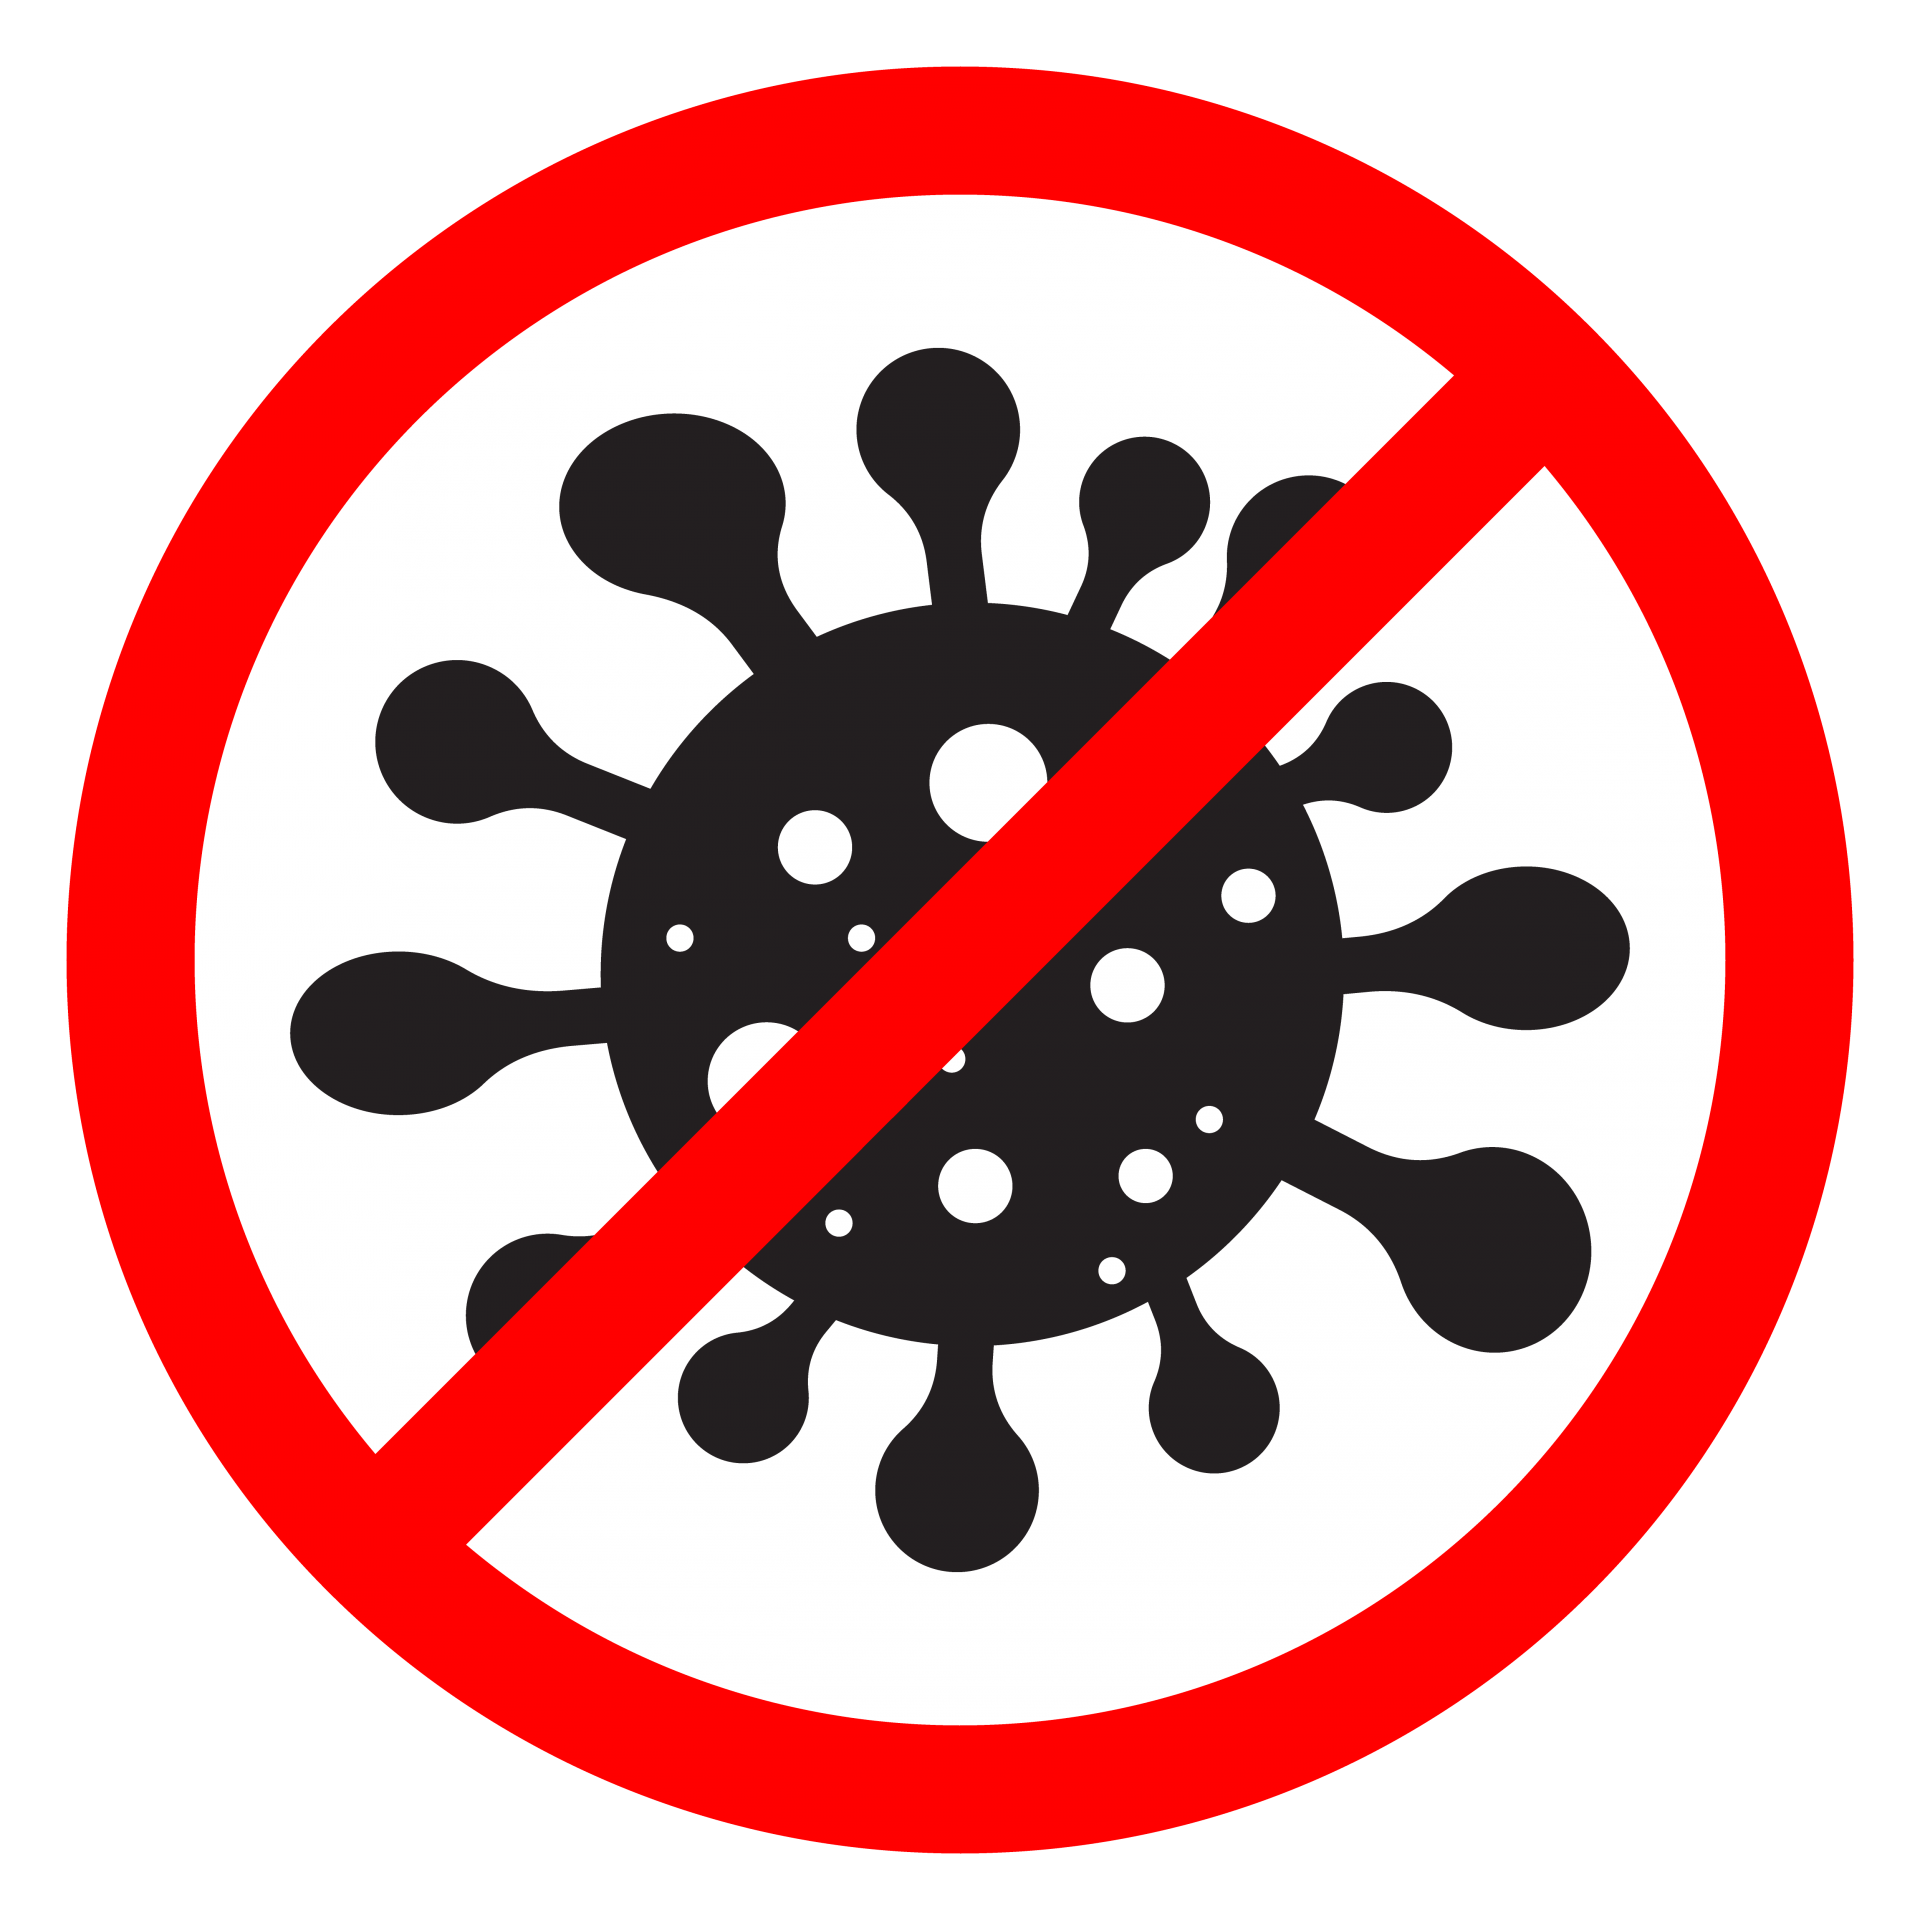 https://publicdomainpictures.net/pictures/320000/velka/coronavirus-infection-no-entry.png